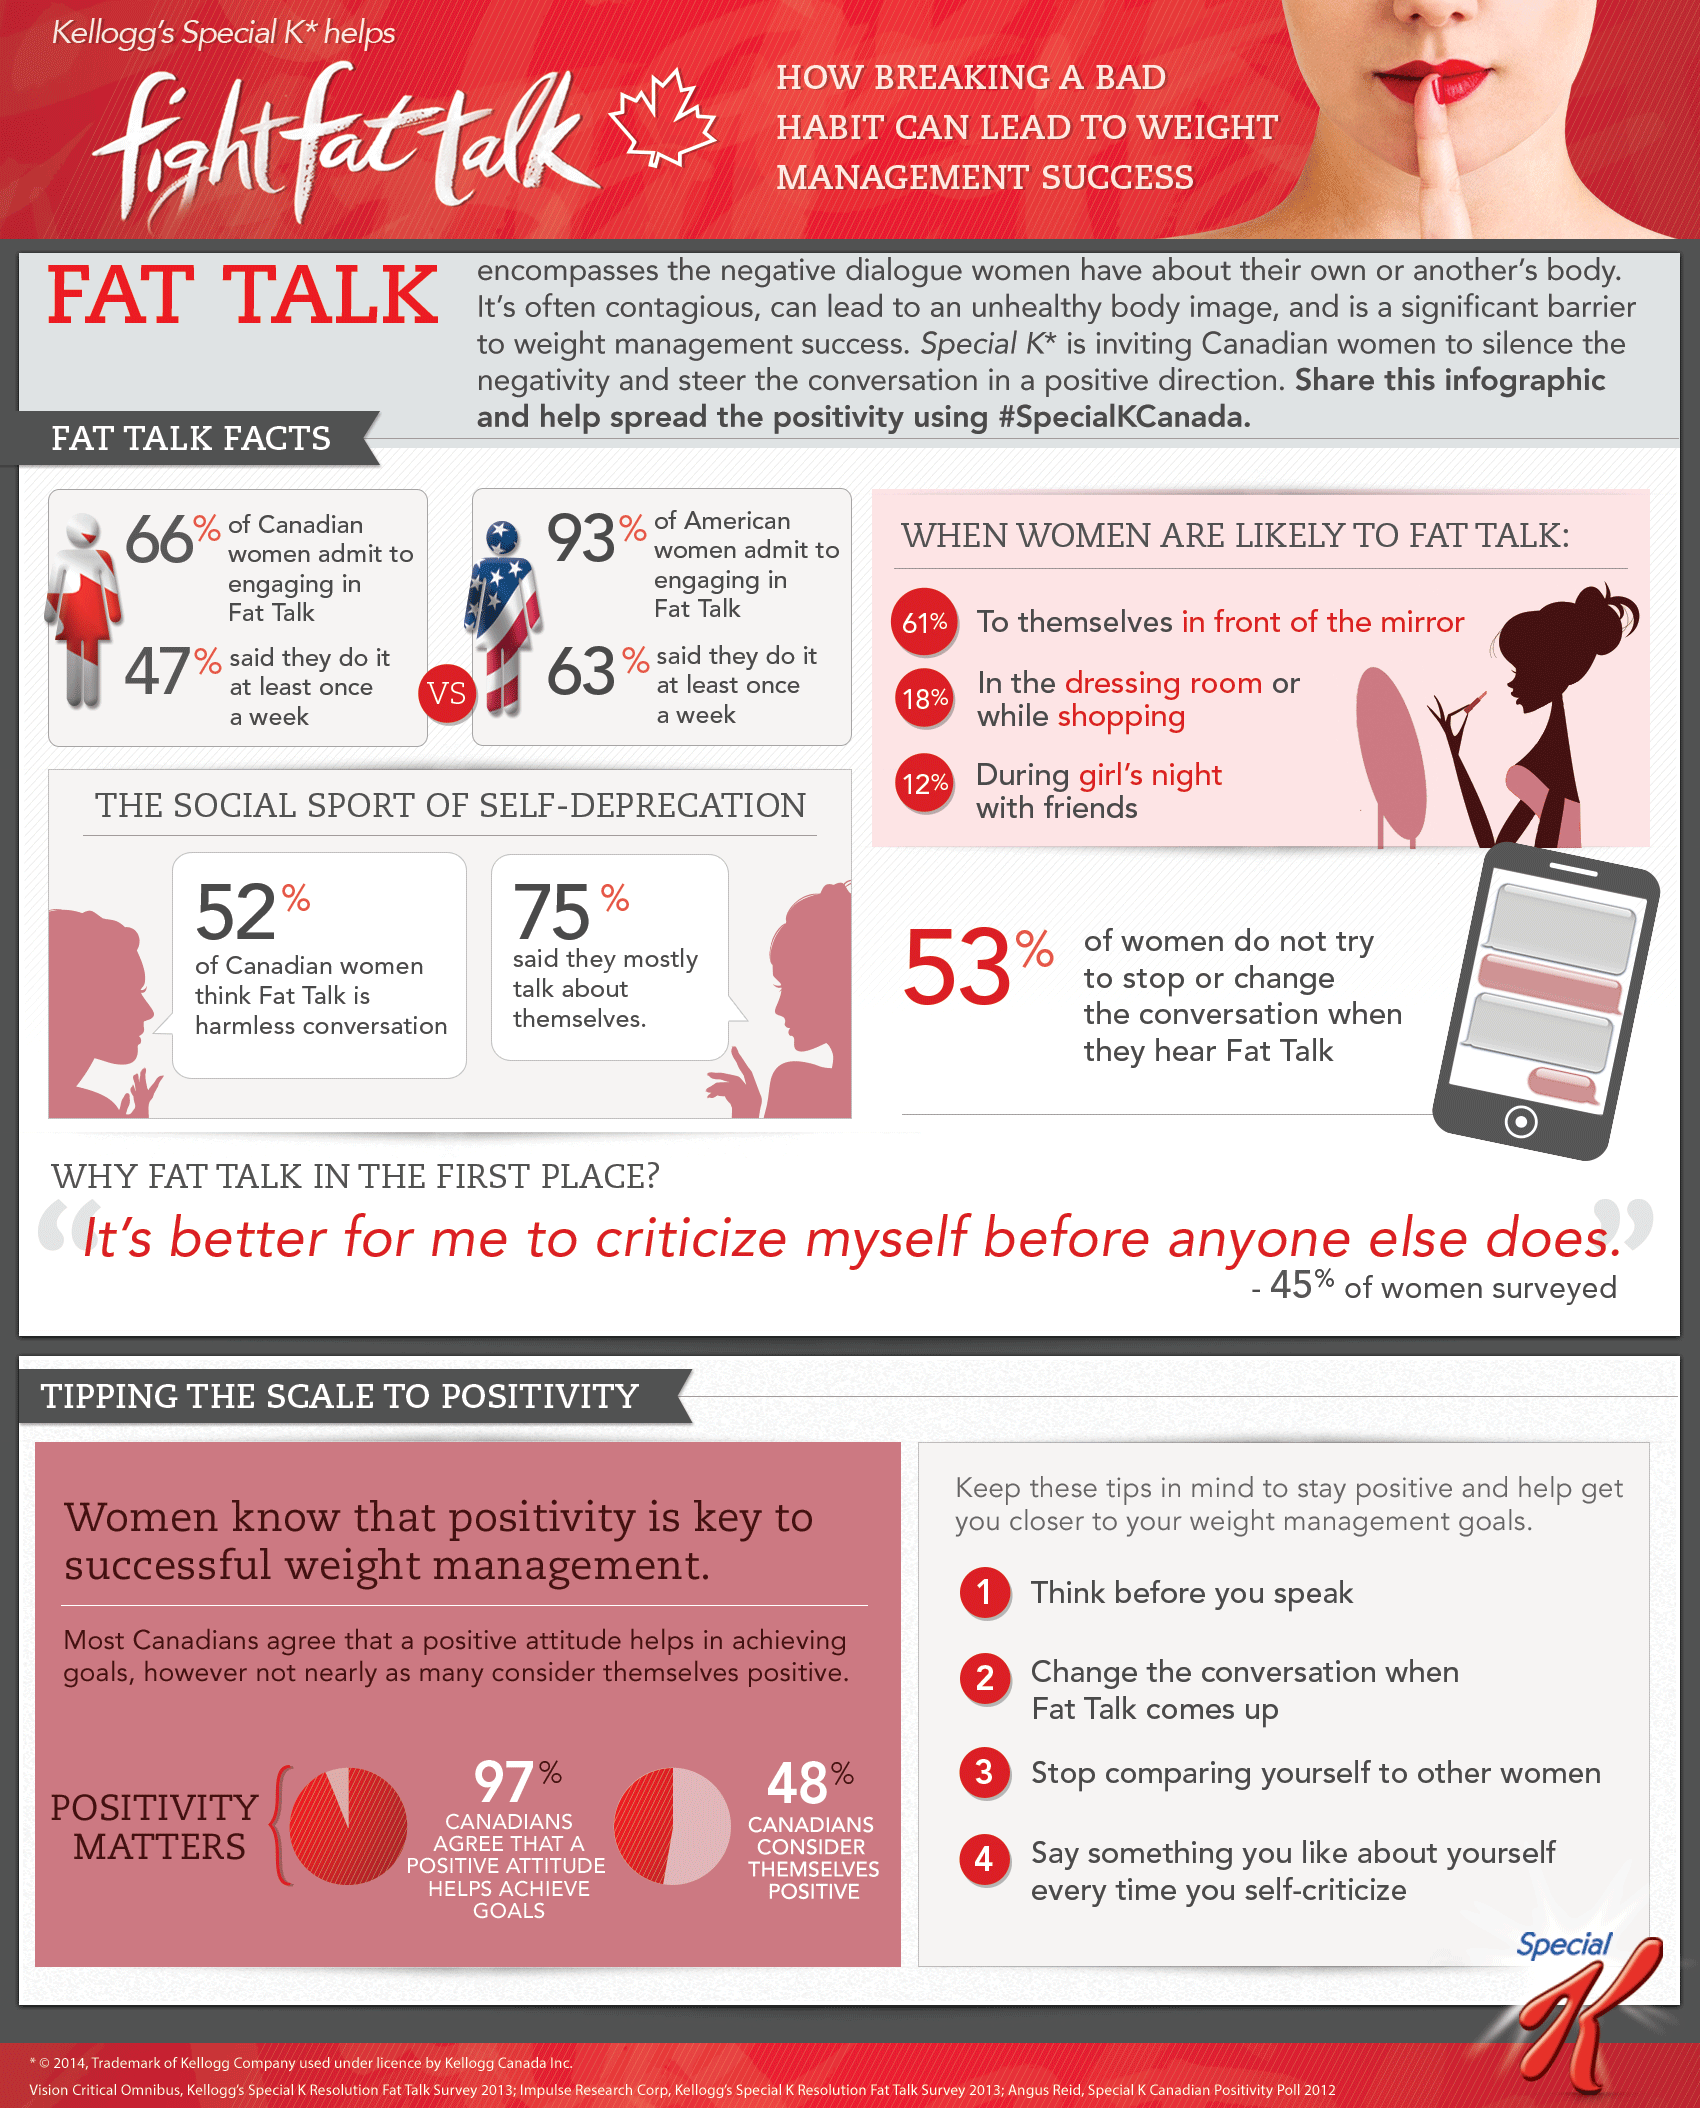 Fight Fat Talk with Positive talk